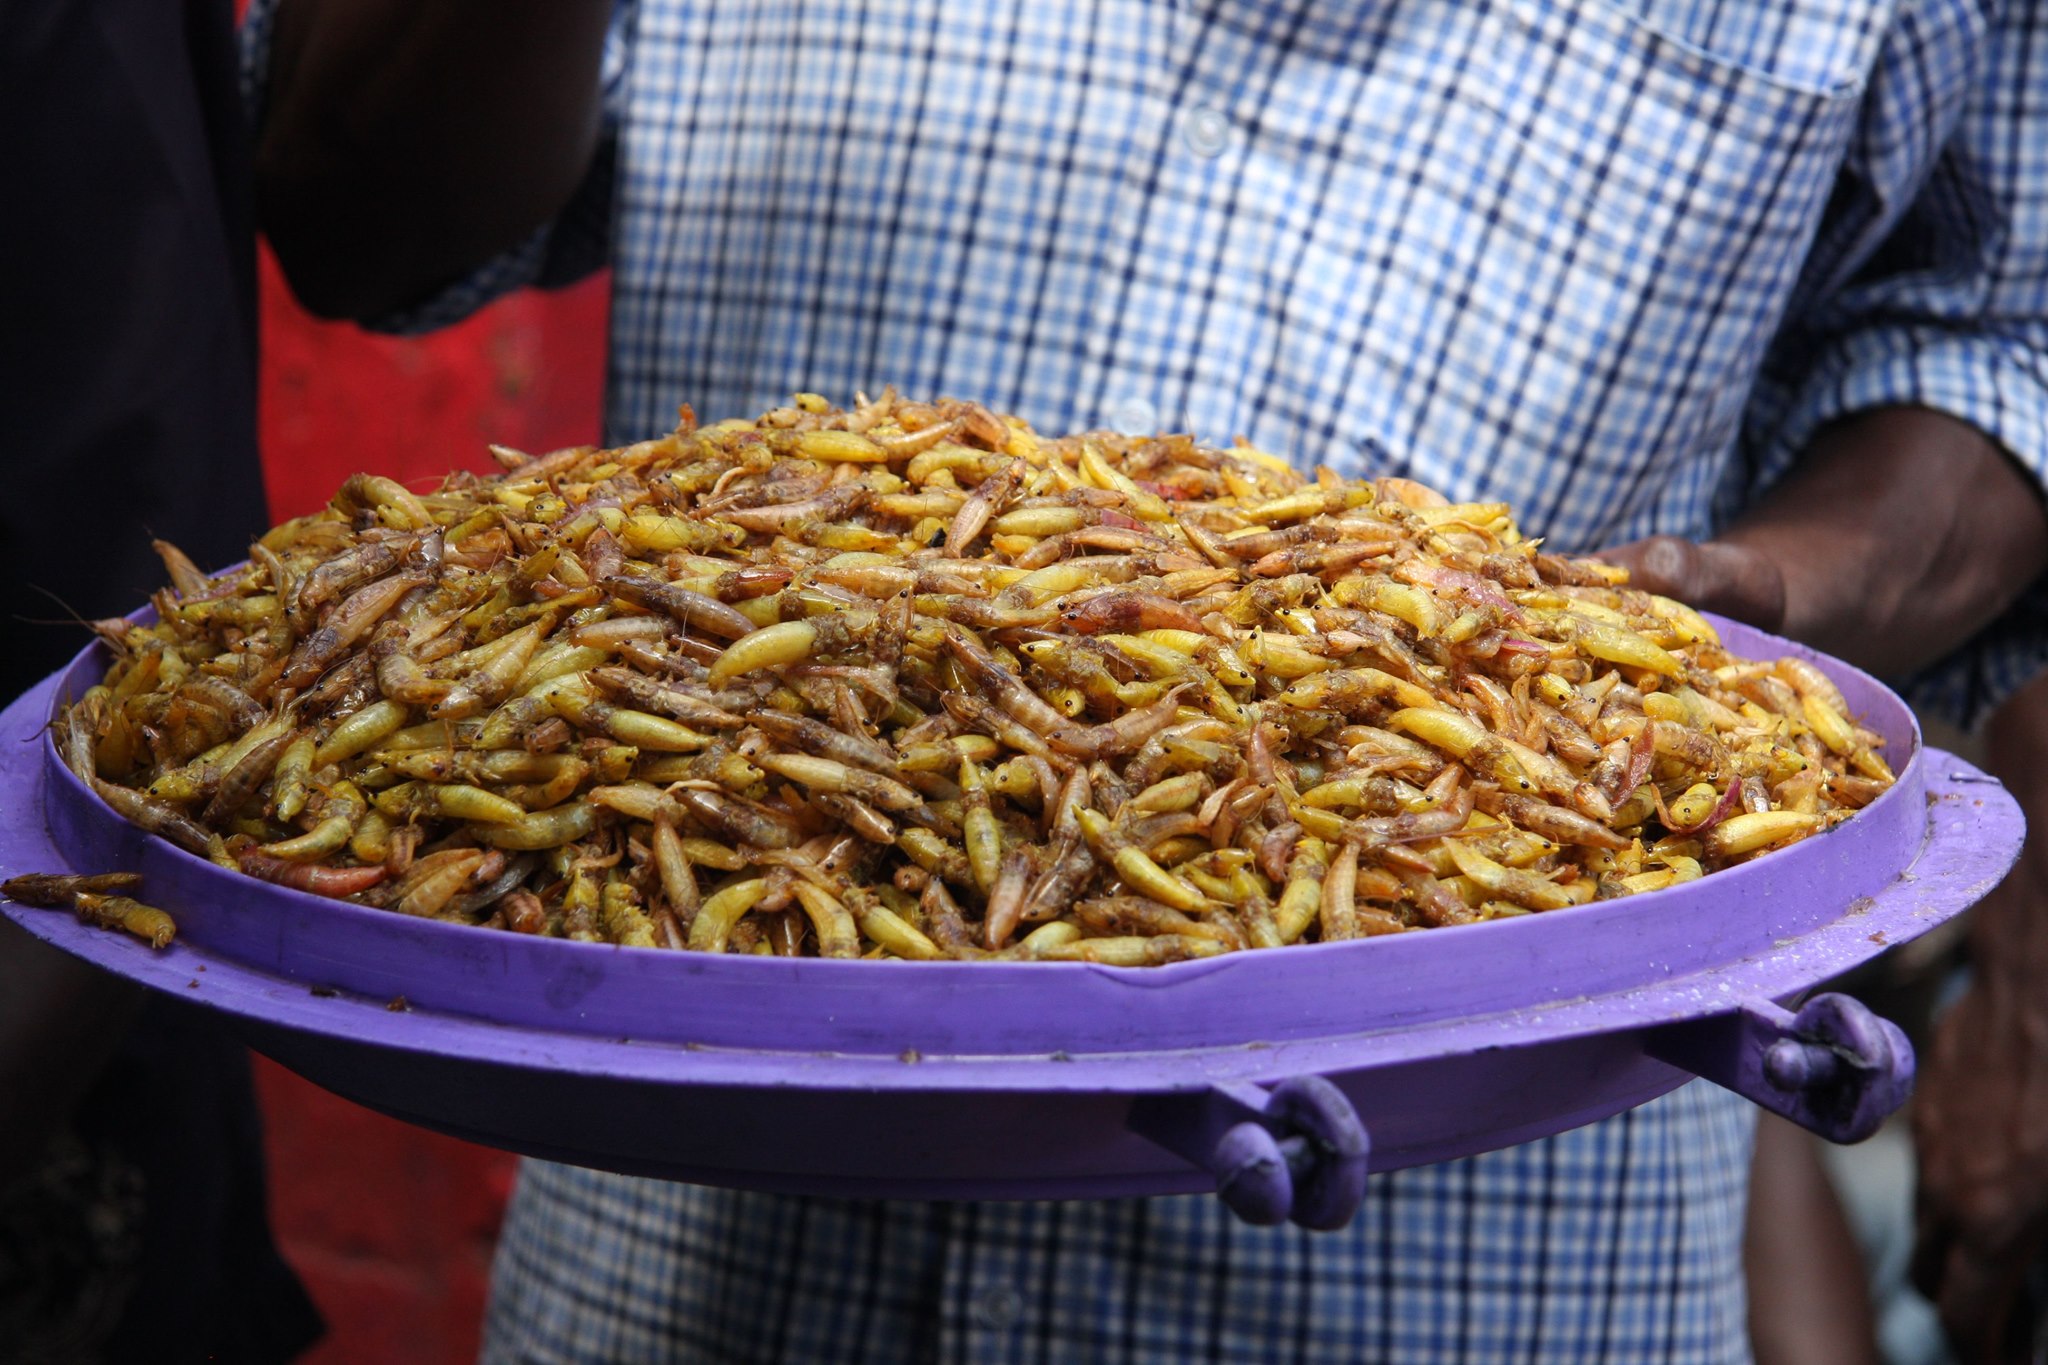 nside Uganda's centuries-old love for eating grasshoppers